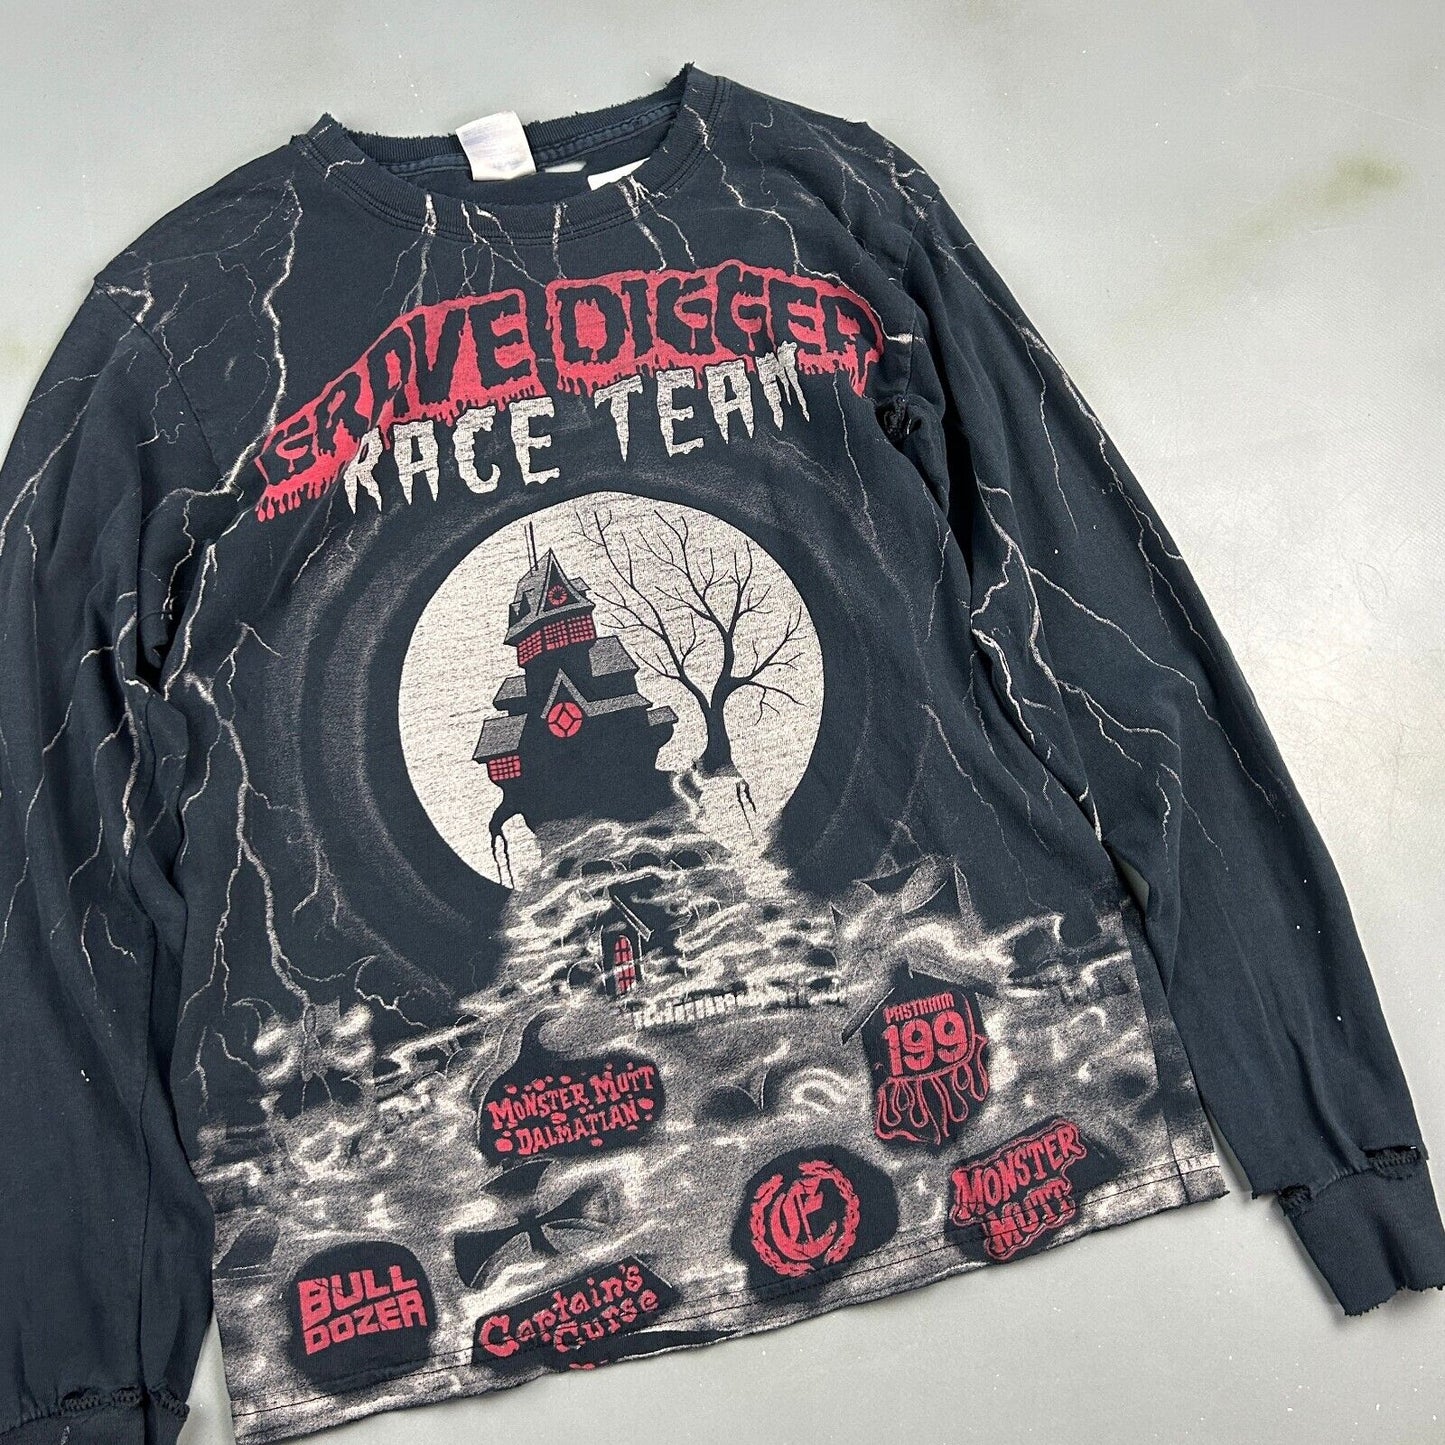 VINTAGE Grave Digger Race Team All Over Print Long Sleeve T-Shirt sz Sm Adult